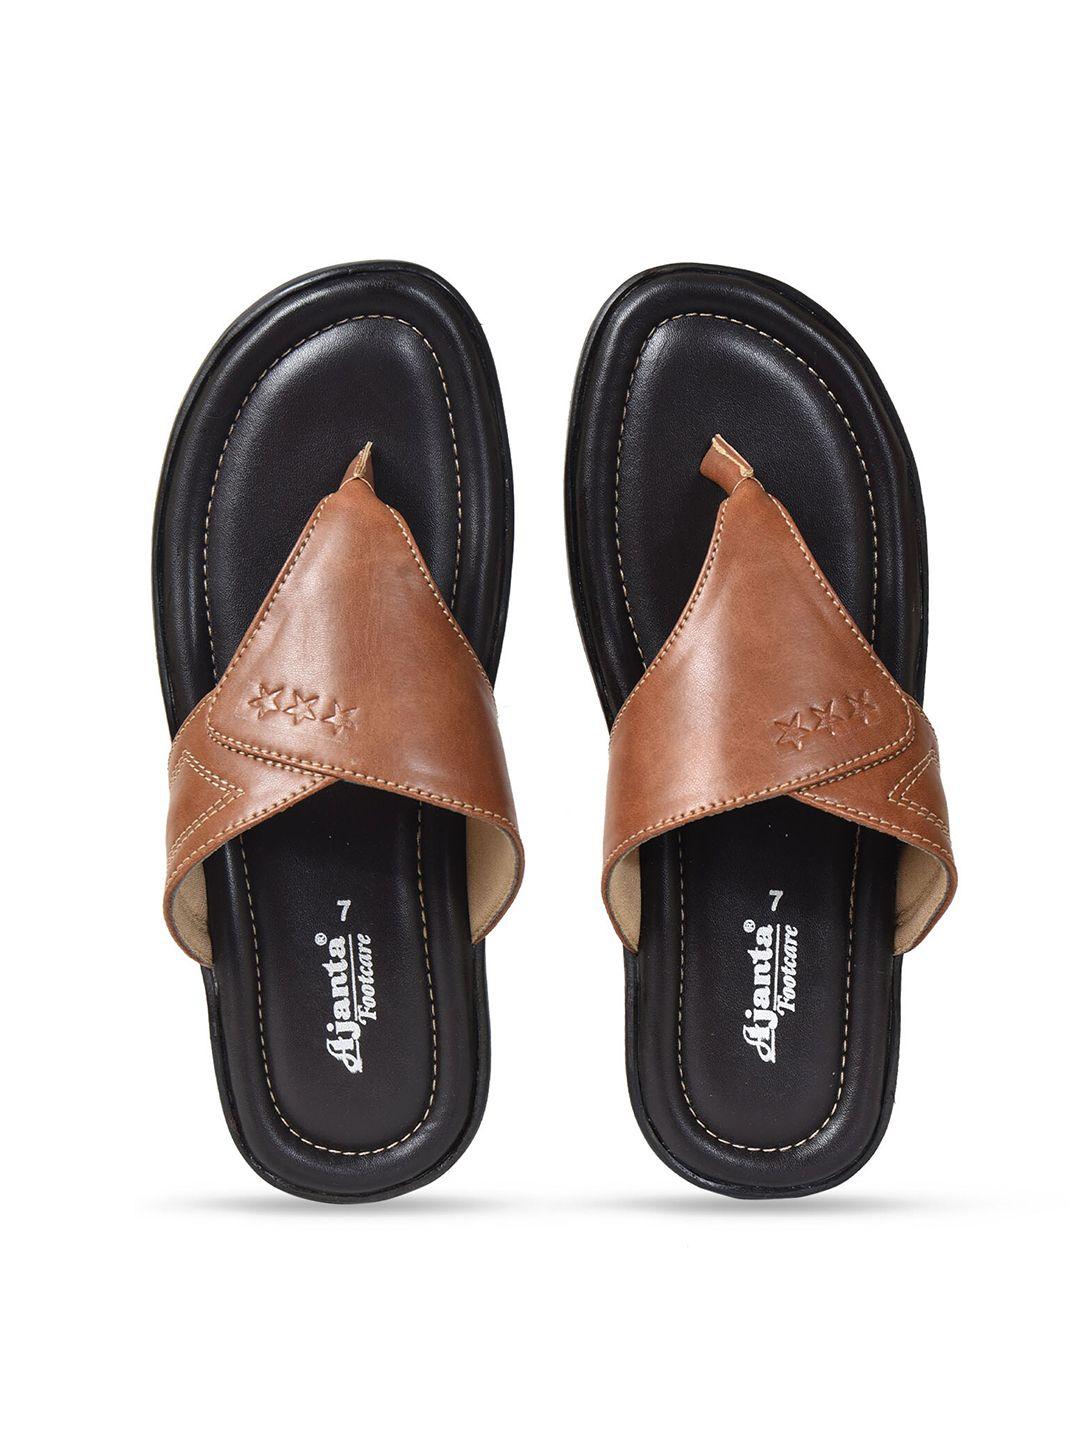 ajanta-men-open-toe-comfort-sandals